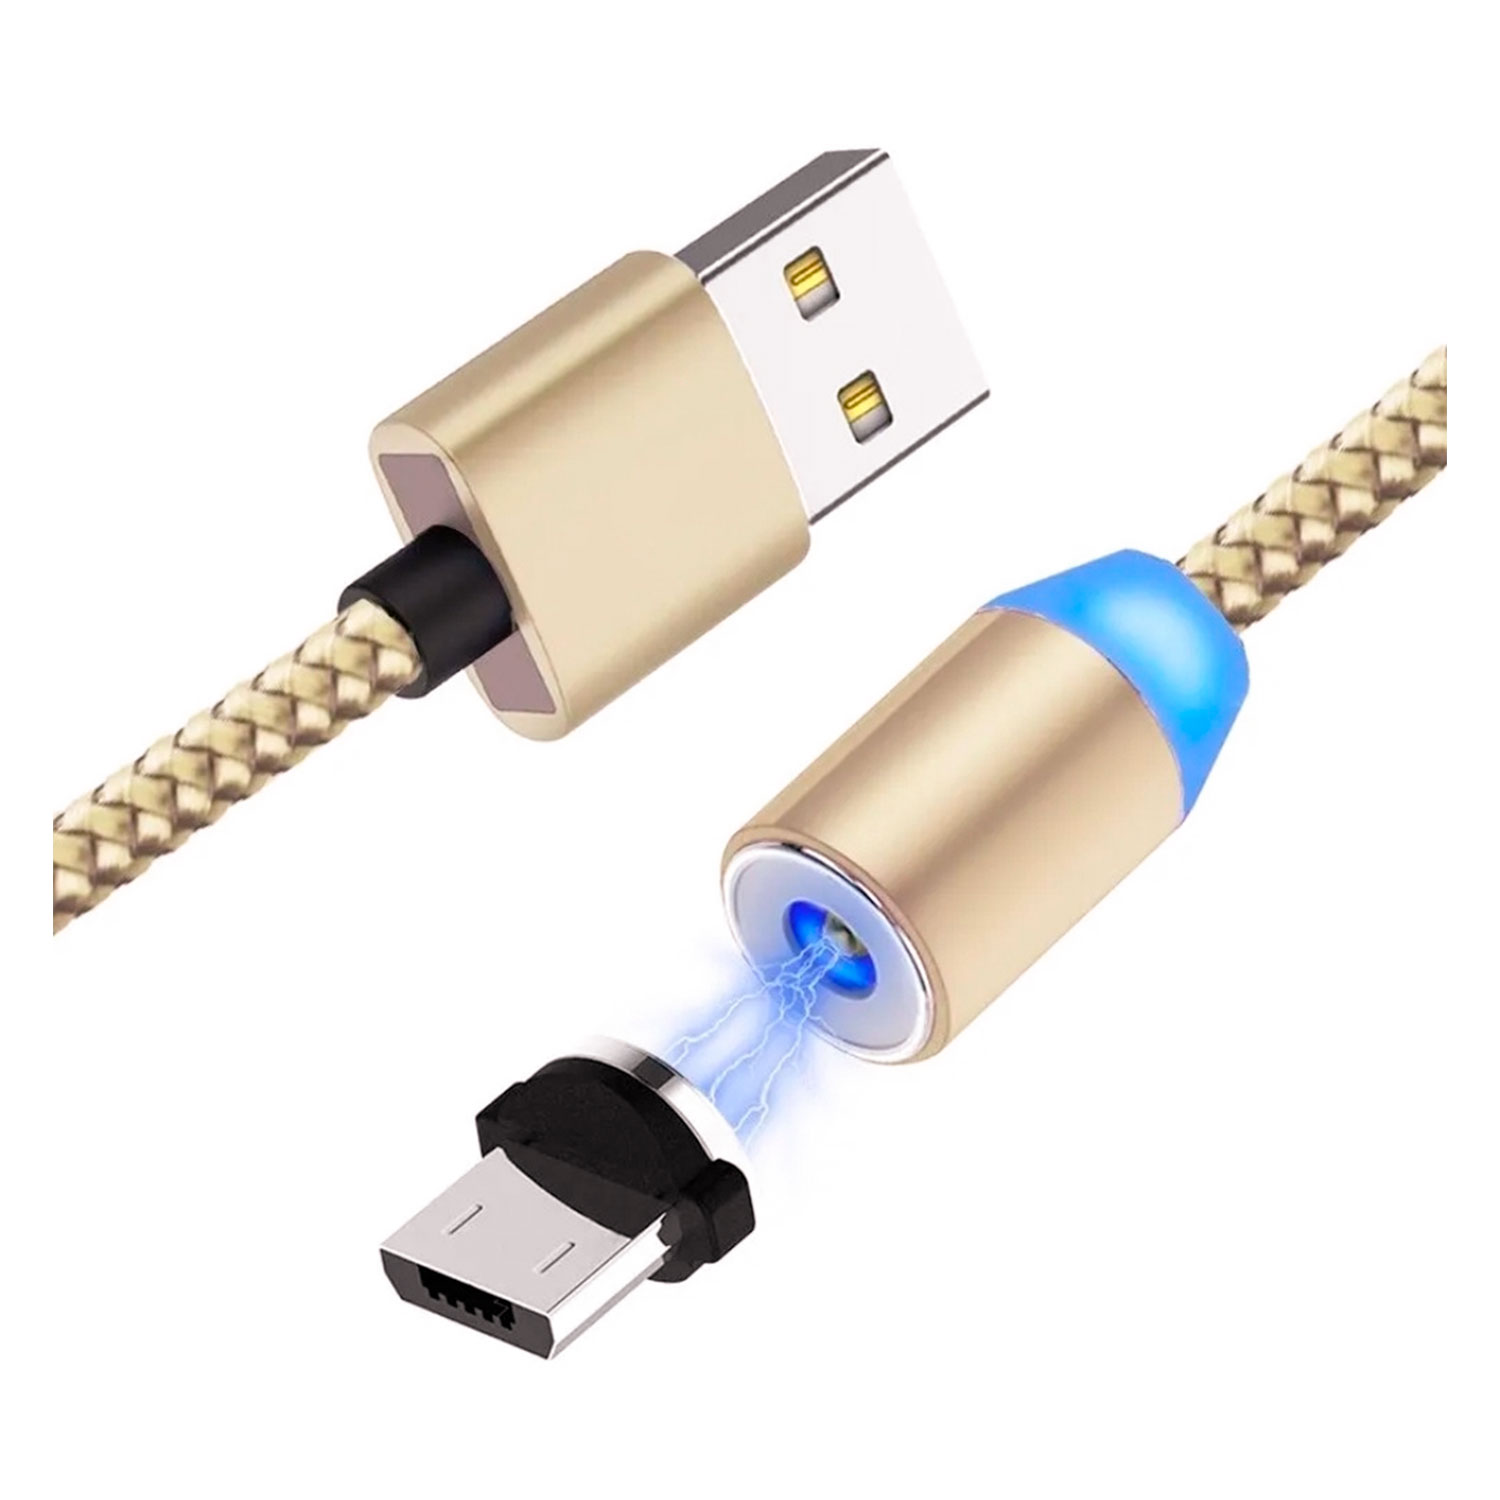 Cabo Magnético Smartzla USB 2.0 a Lightning Type-C Micro USB SAT-C005 1M - Dourado
